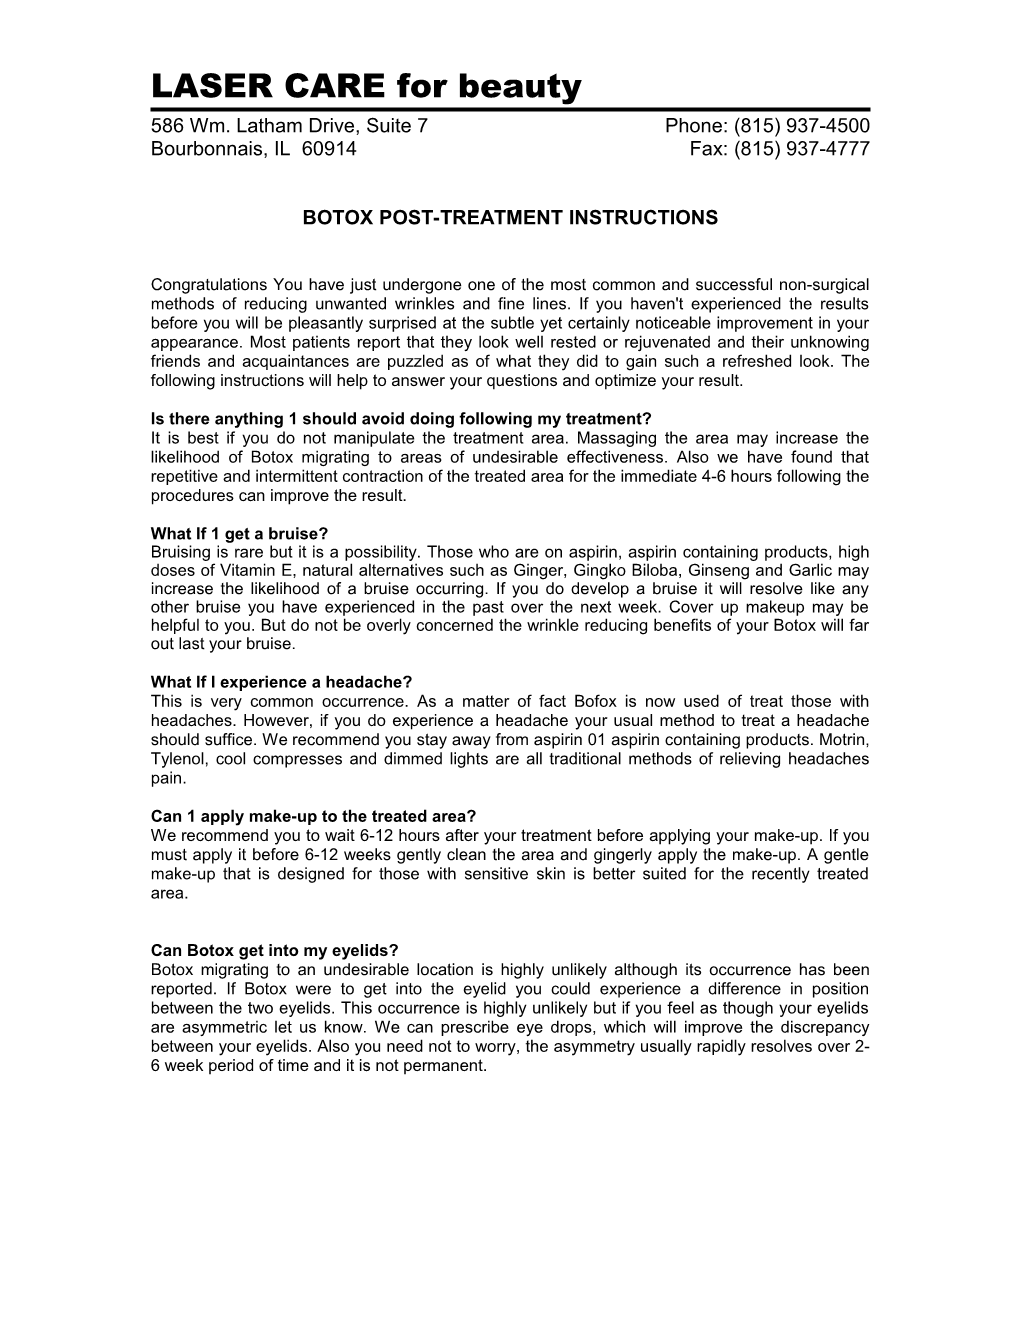 Botox Post-Treatment Instructions s2